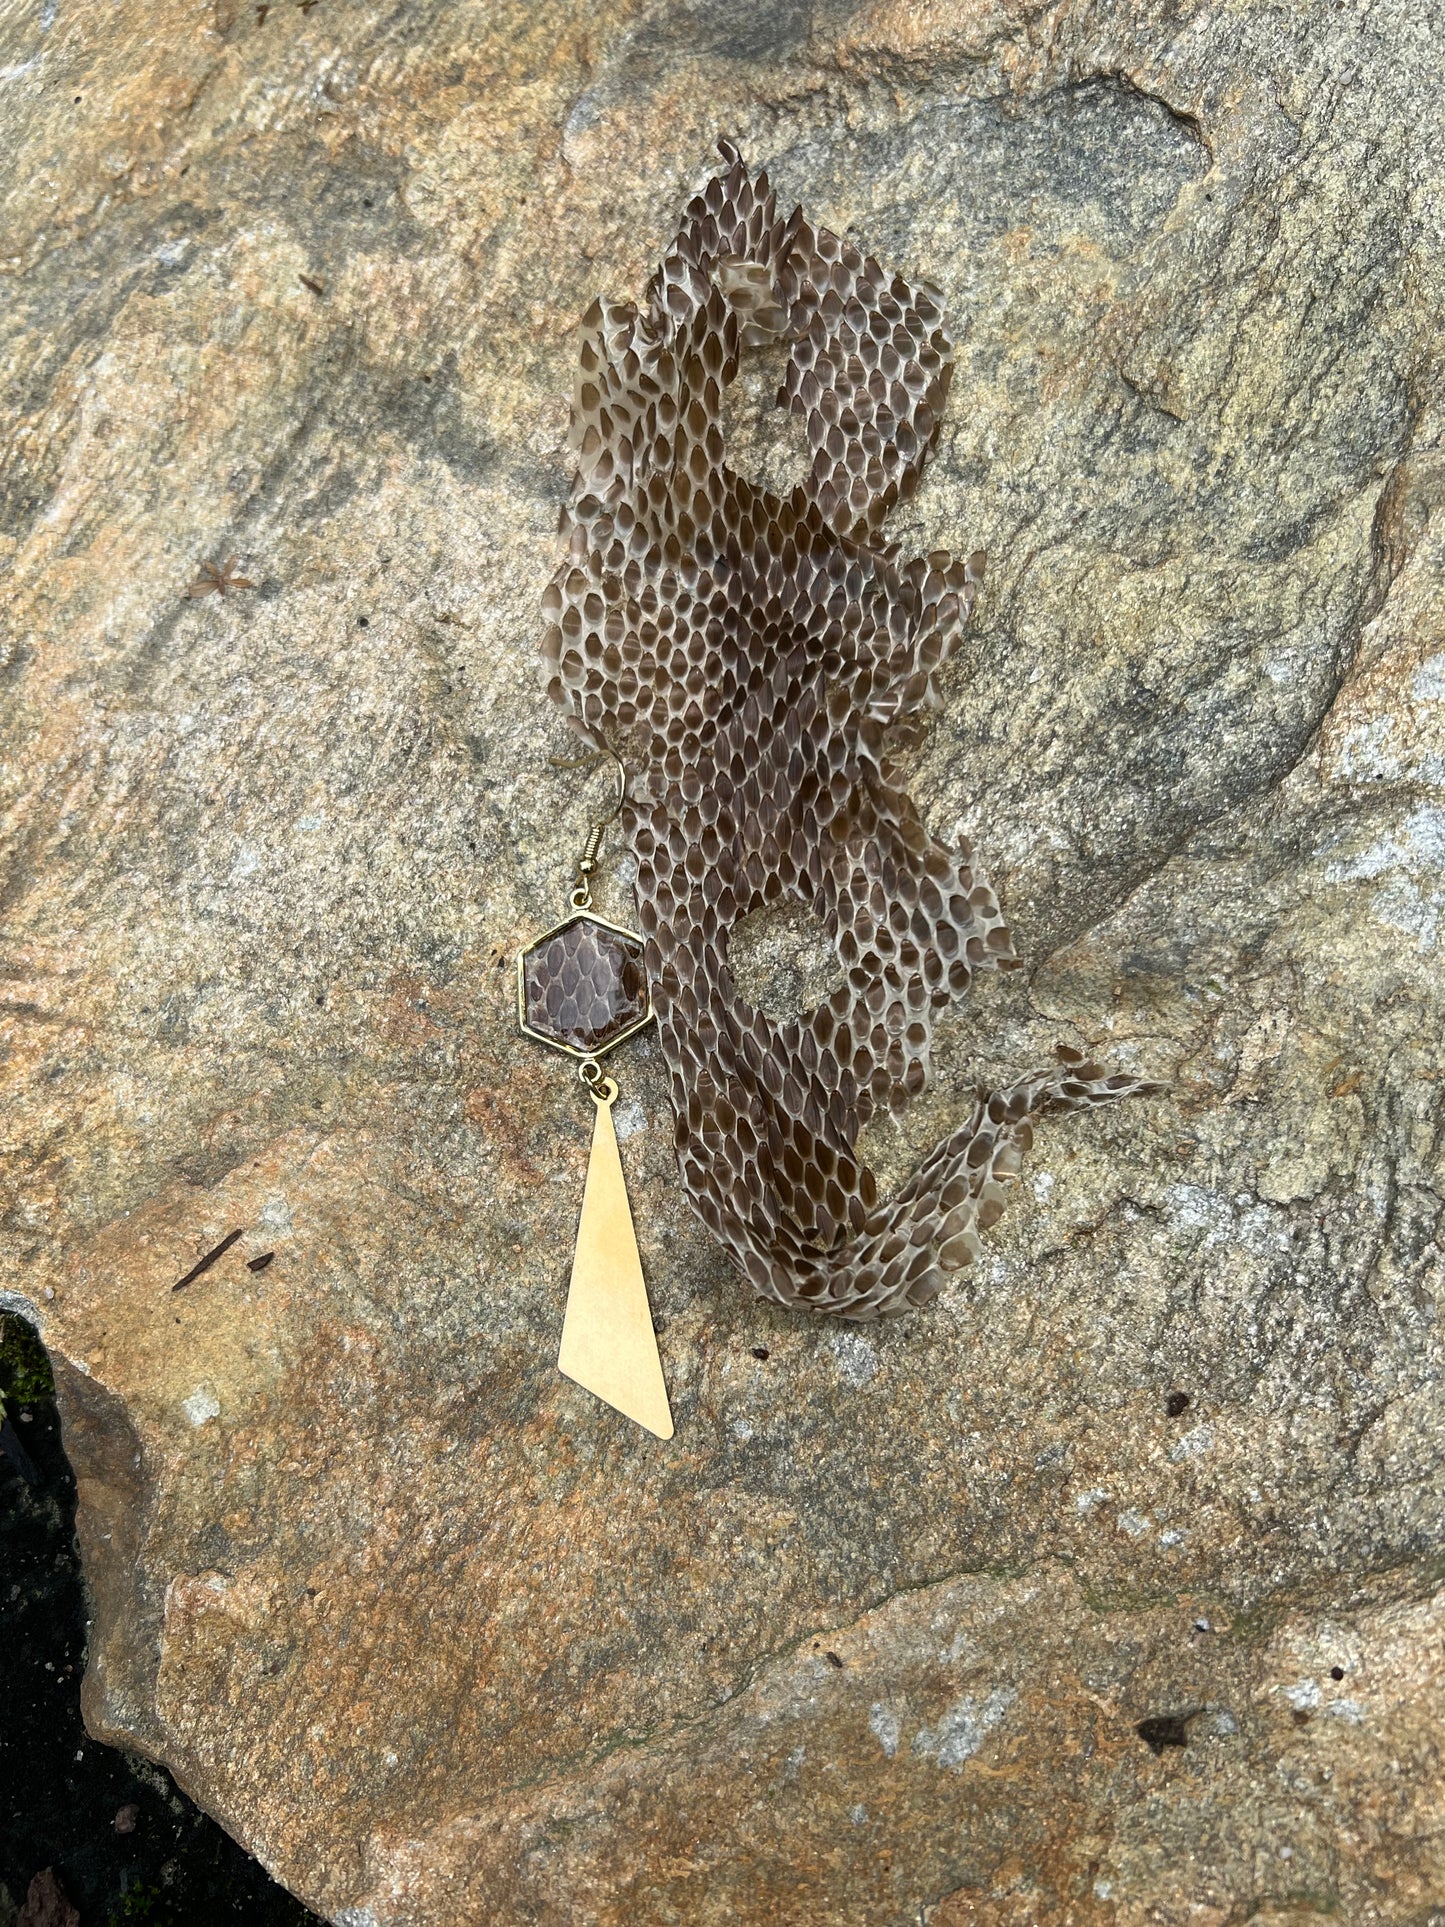 Snakeskin Honeycombs